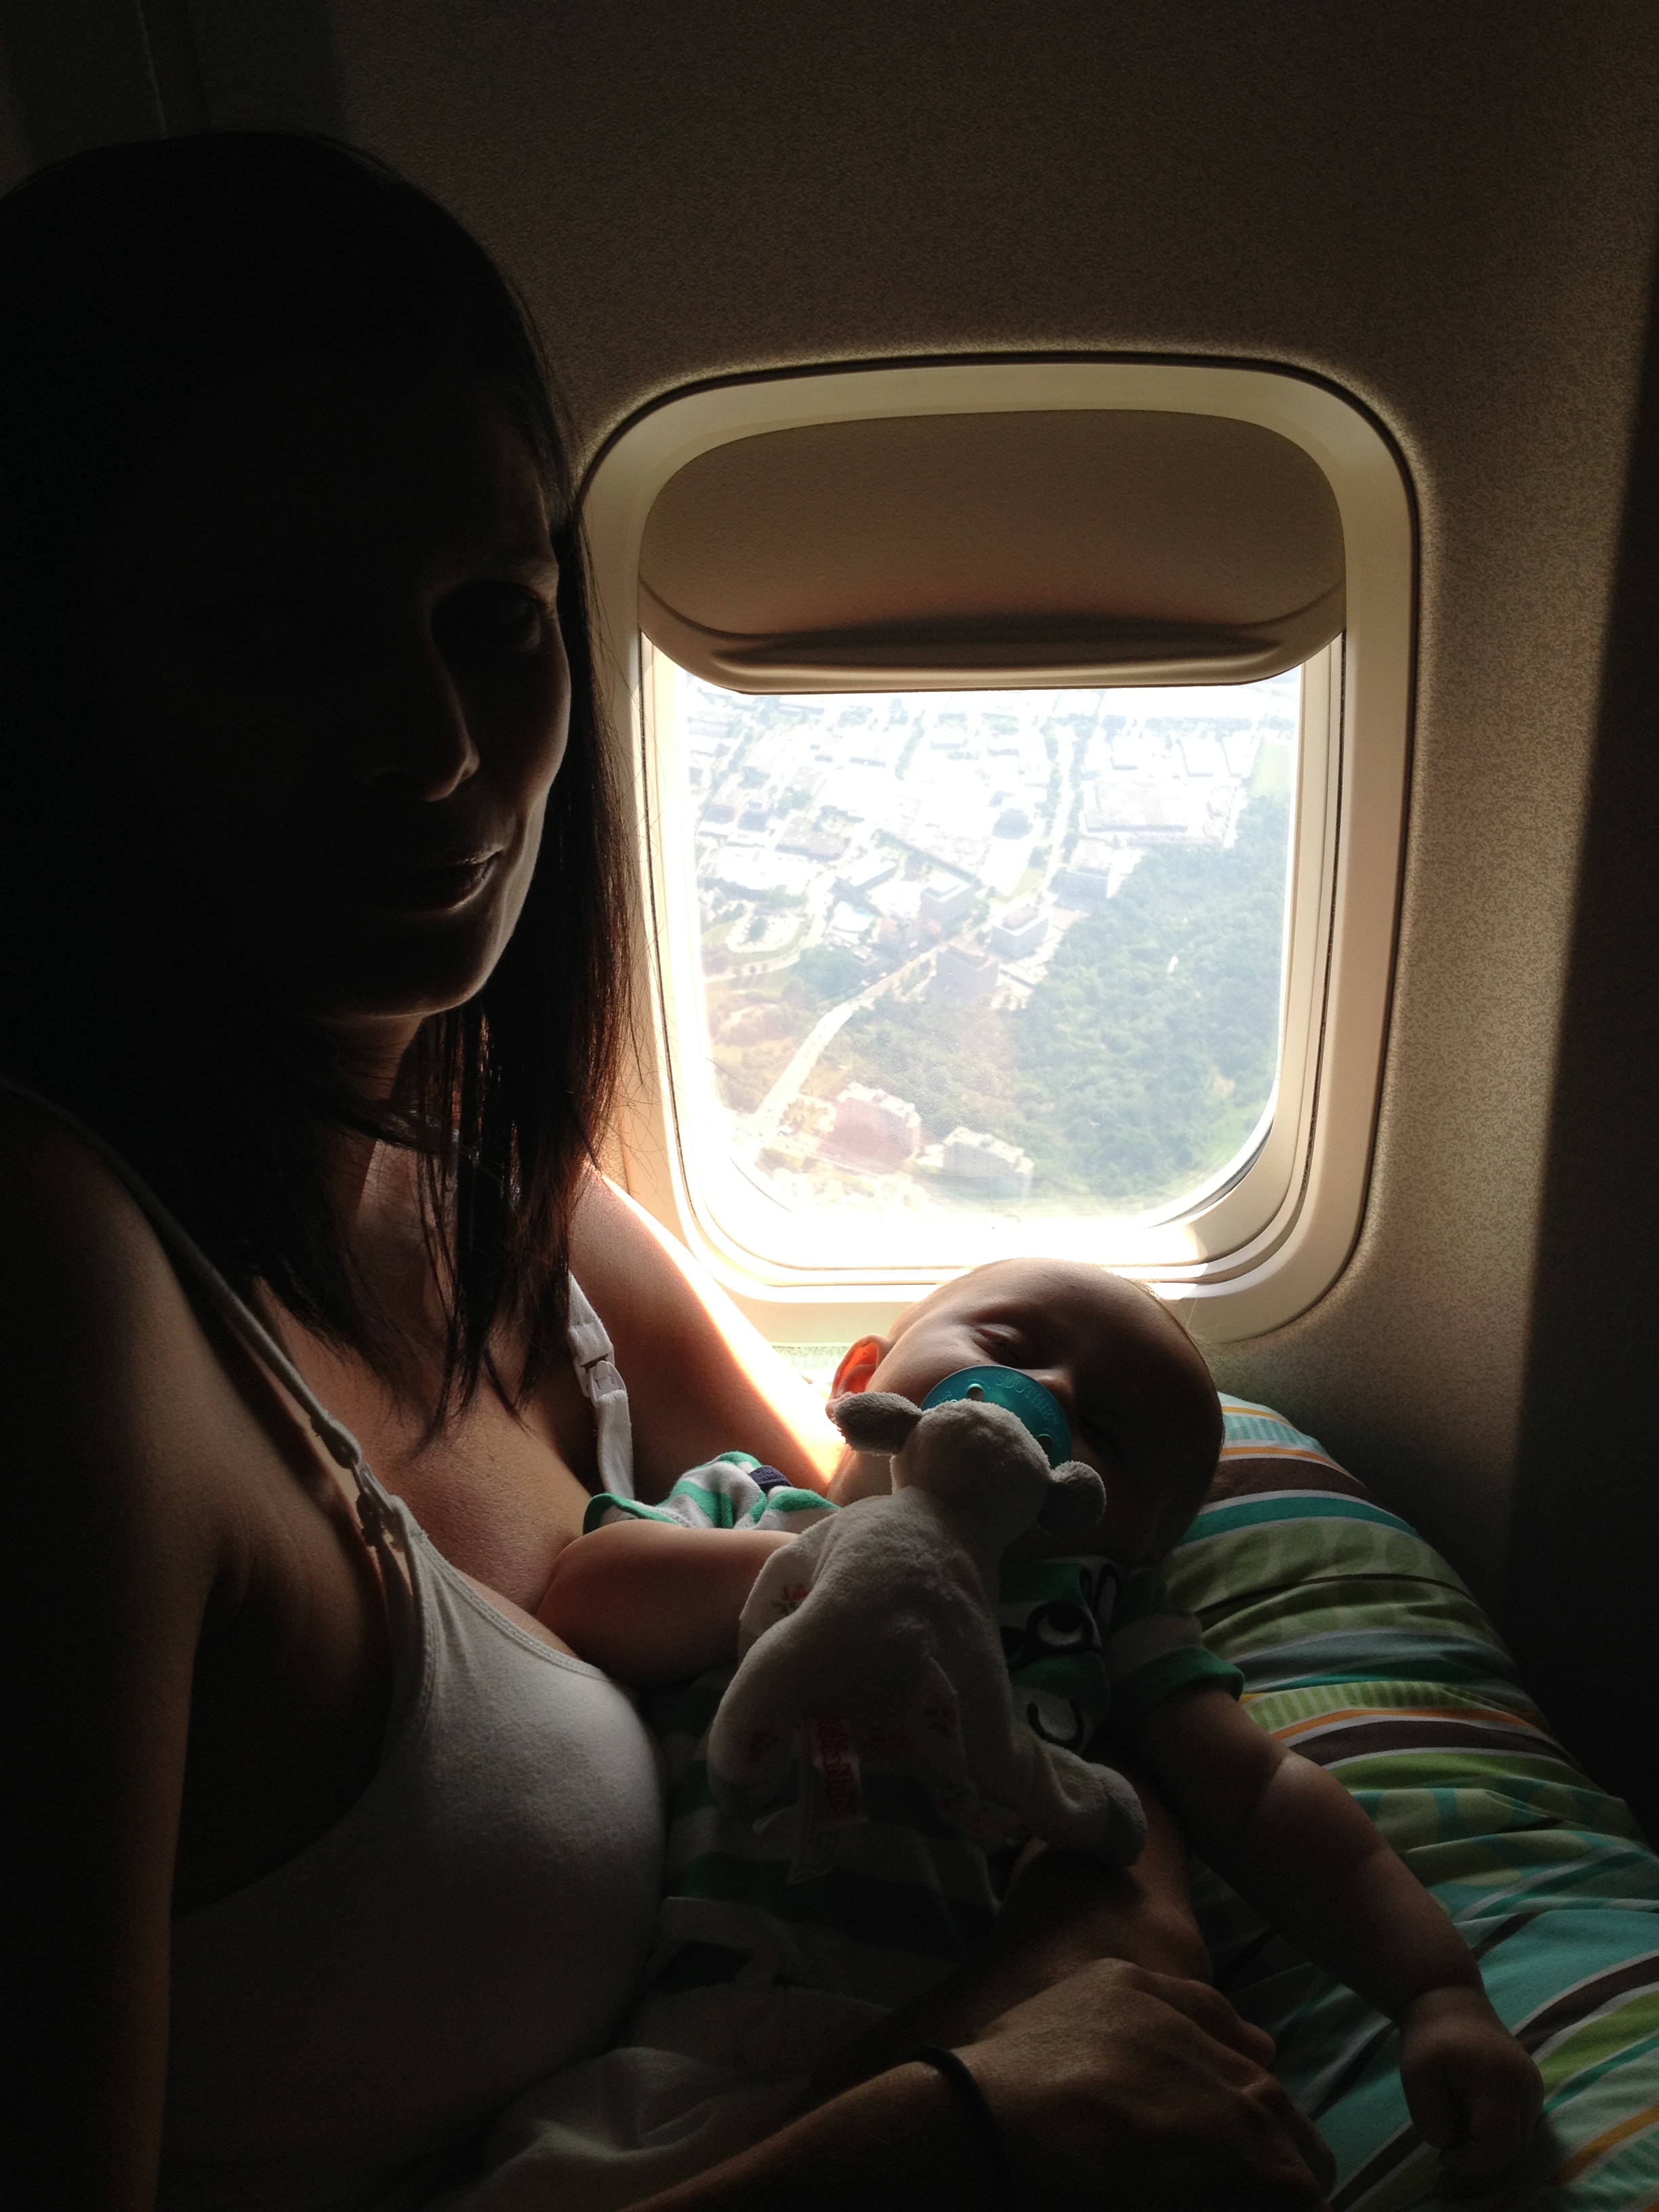 How To Make Baby Sleep On Plane